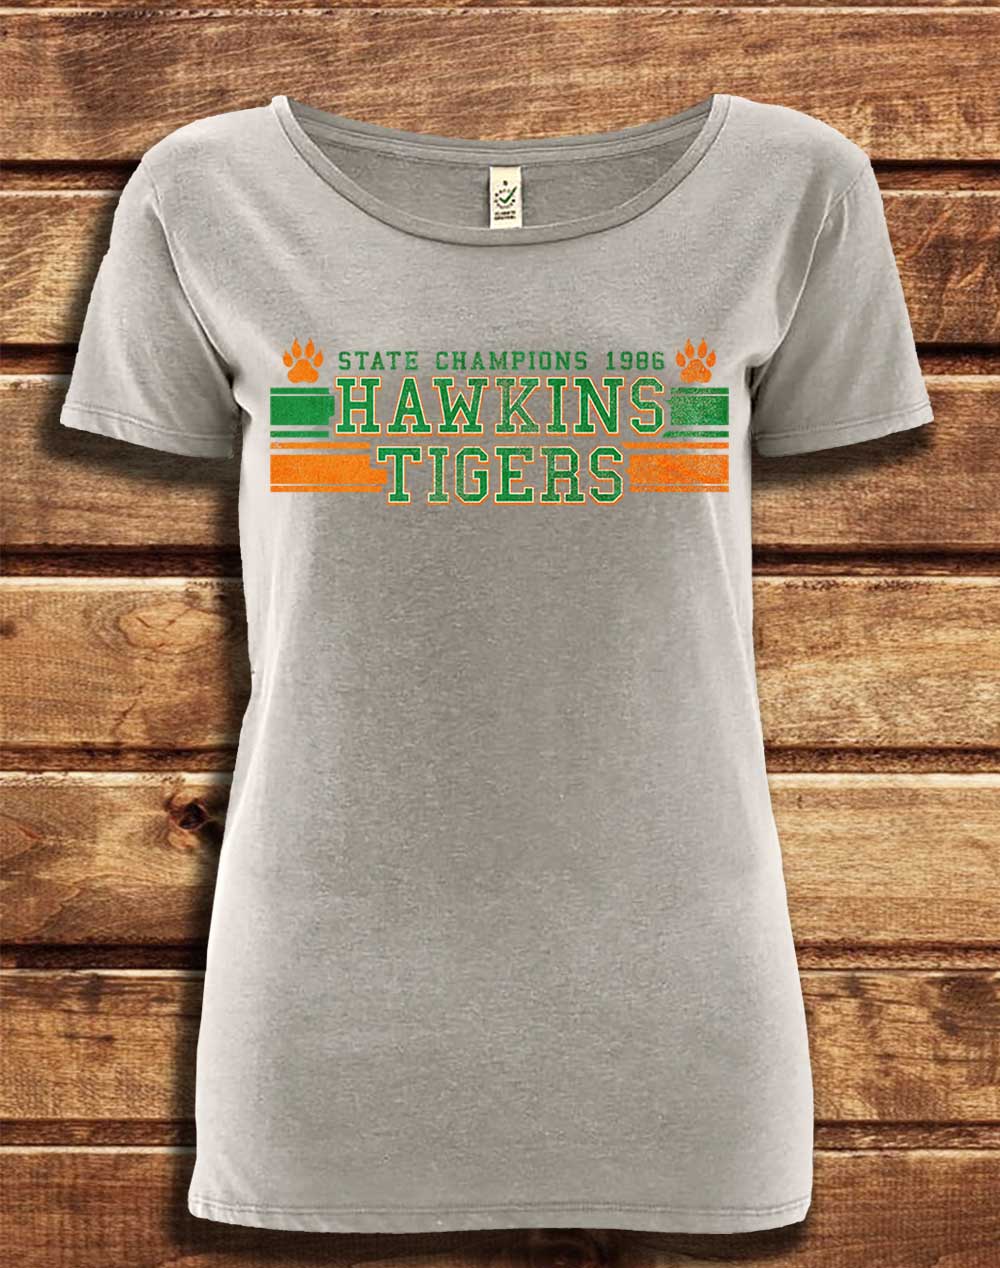 Melange Grey - DELUXE Hawkins Tigers State Champs 1986 Organic Scoop Neck T-Shirt